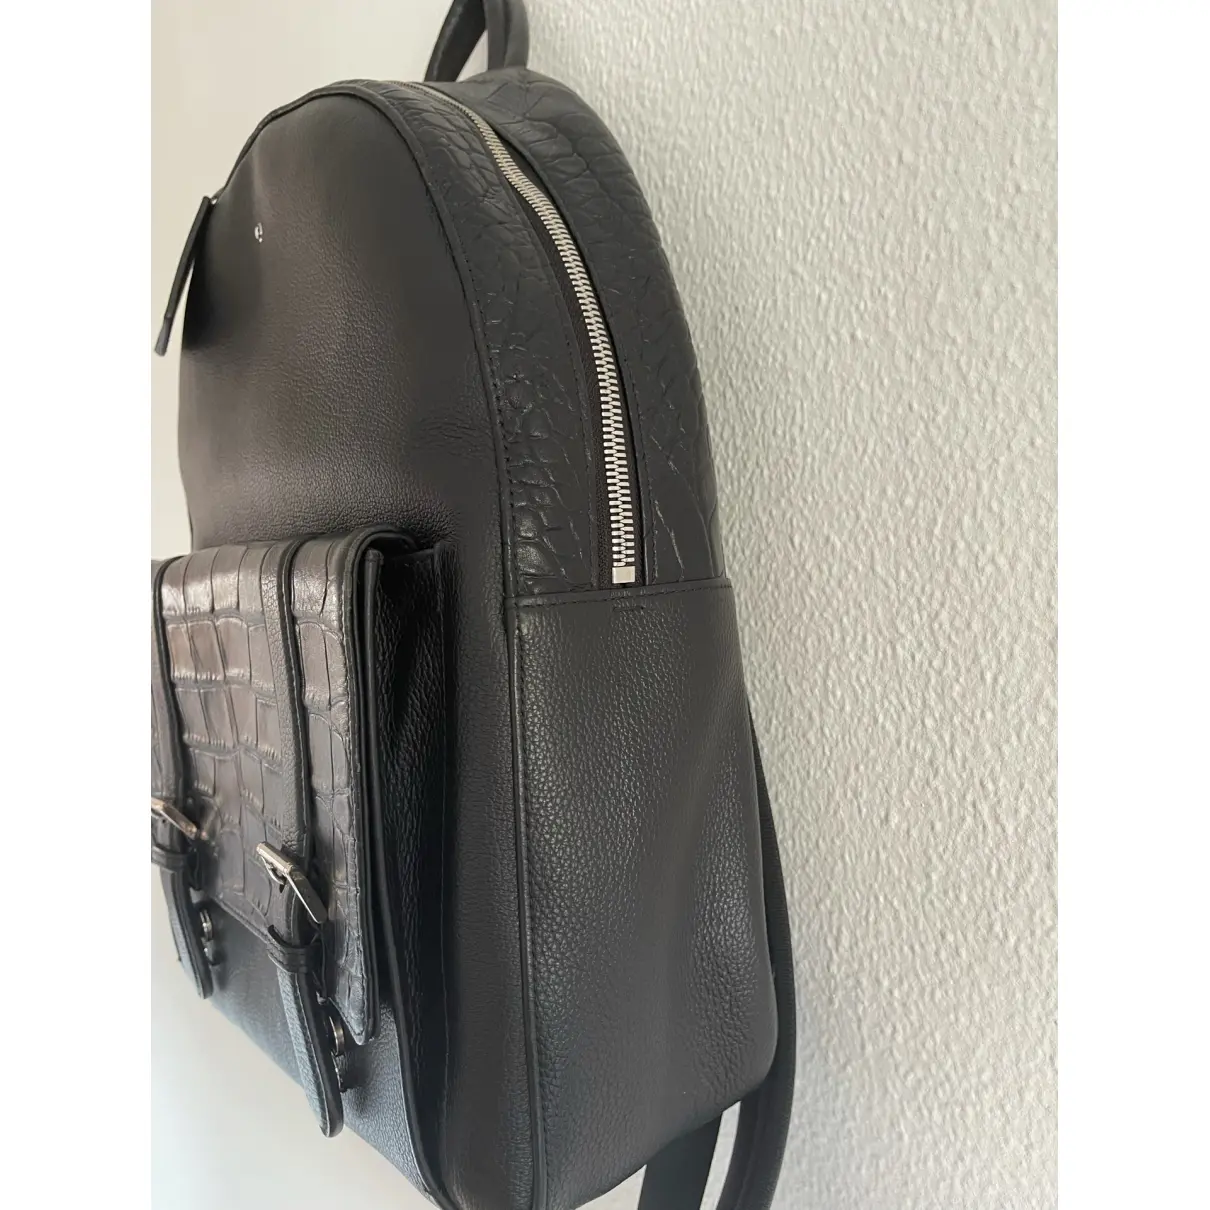 Buy Montblanc Leather travel bag online